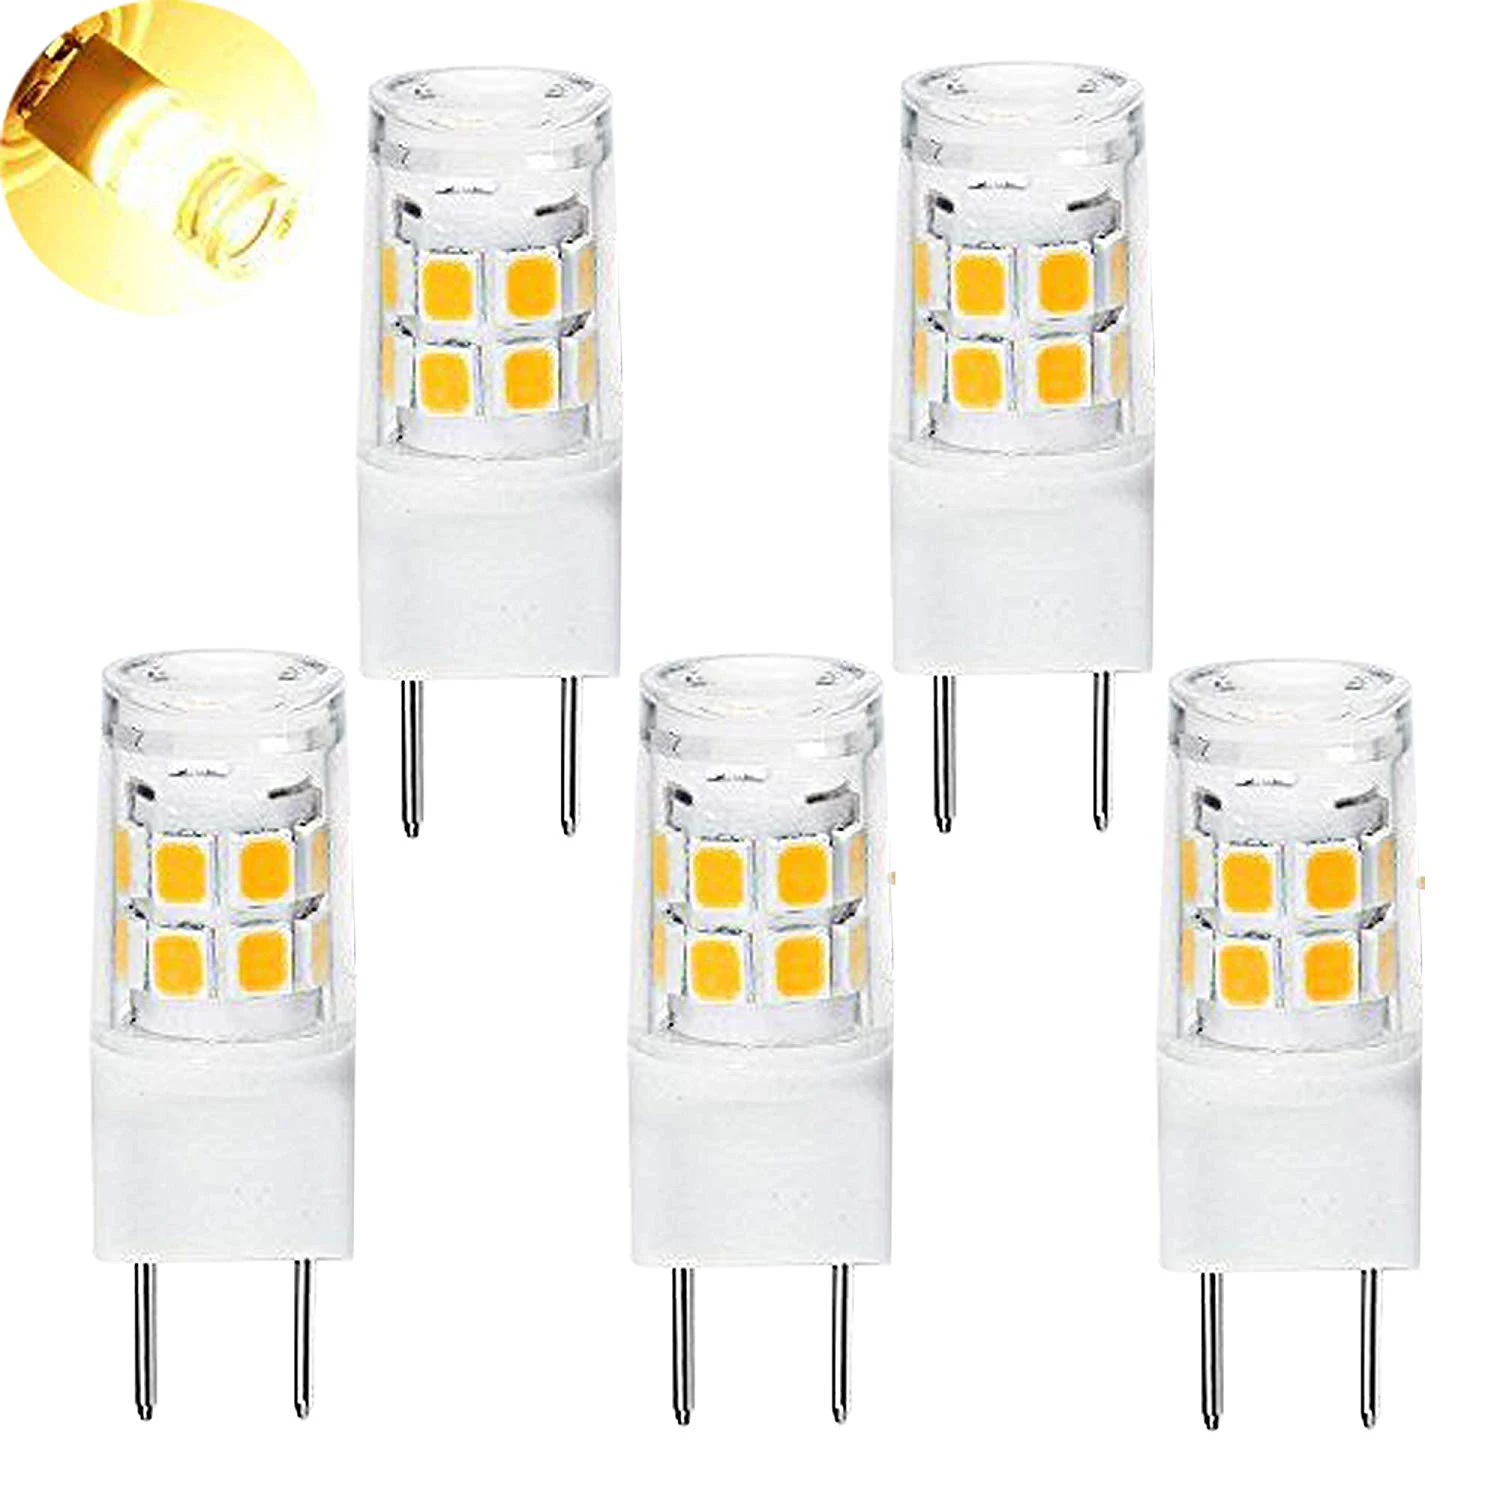 

LED G8 Light Bulb, G8 GY8.6 Bi-pin Base LED, Not Dimmable T4 G8 Base Bi-pin Xenon JCD Type LED 120V (5-Pack) (G8 3W)